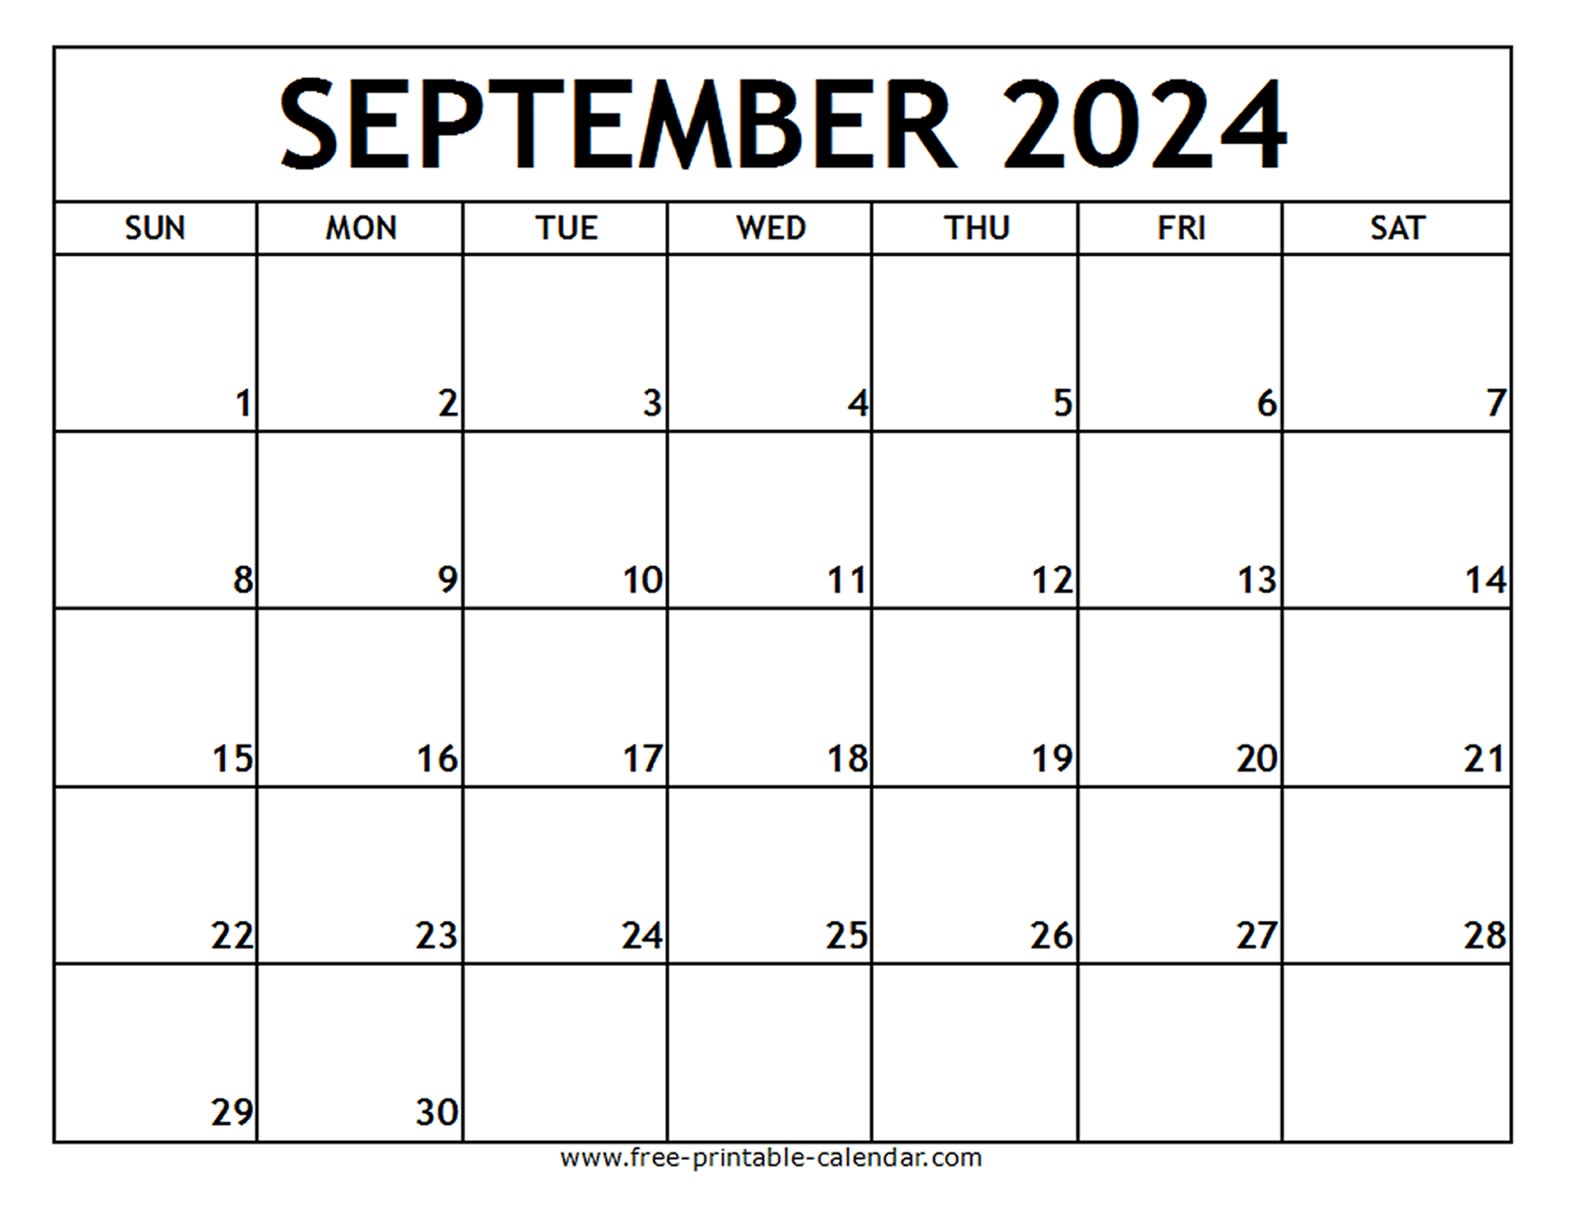 September 2024 Printable Calendar - Free-Printable-Calendar within Free Printable Appointment Calendar September 2024